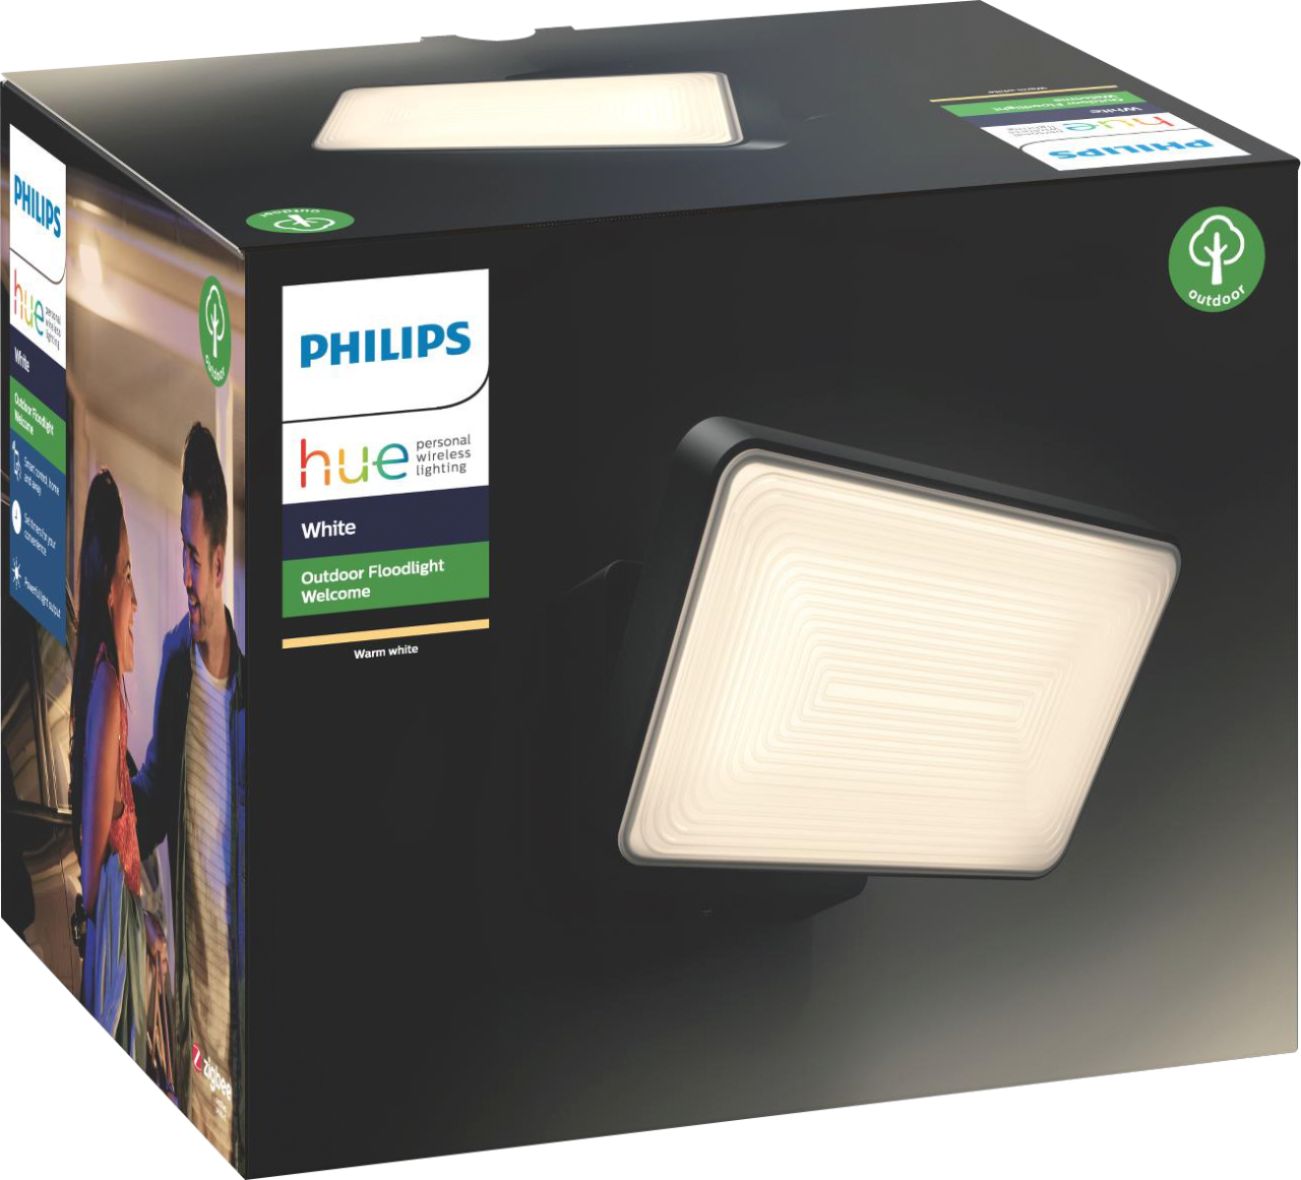 Philips Hue White Welcome Outdoor Floodlight Black 1743630V7 Best Buy